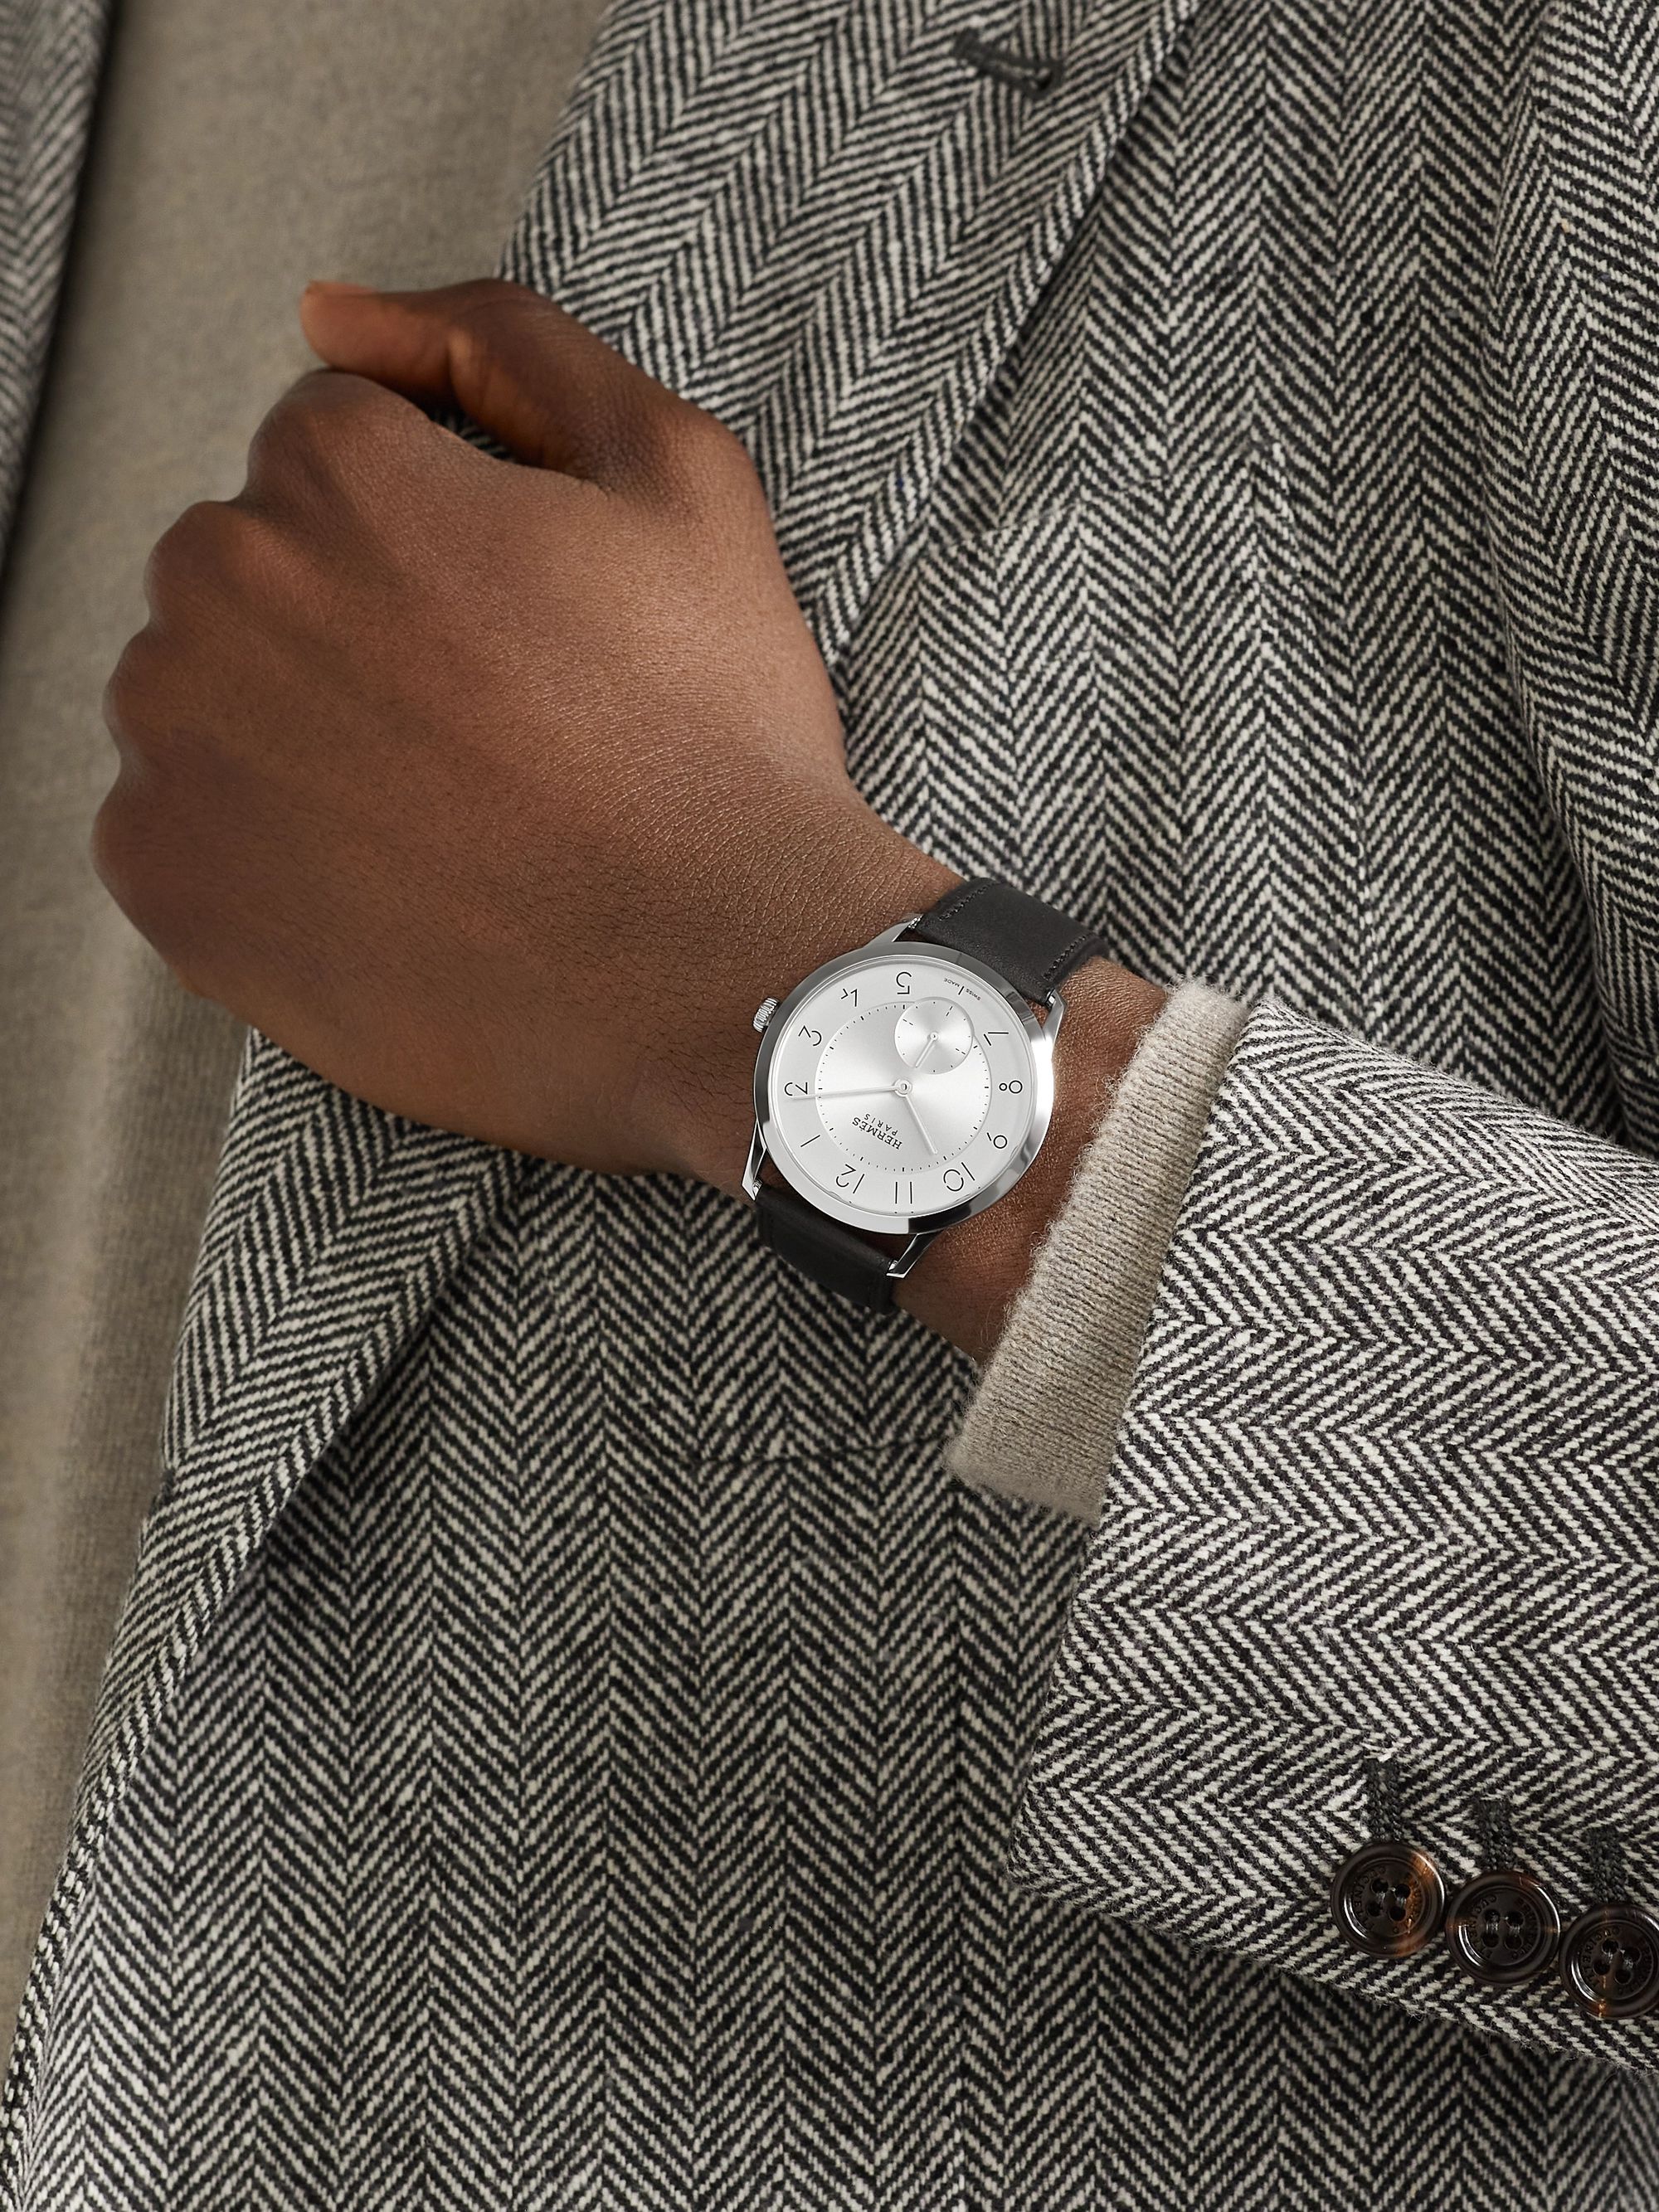 HERMÈS TIMEPIECES Slim d'Hermès Acier Automatic 39.5mm Stainless Steel and Leather Watch, Ref. No. 052839WW00